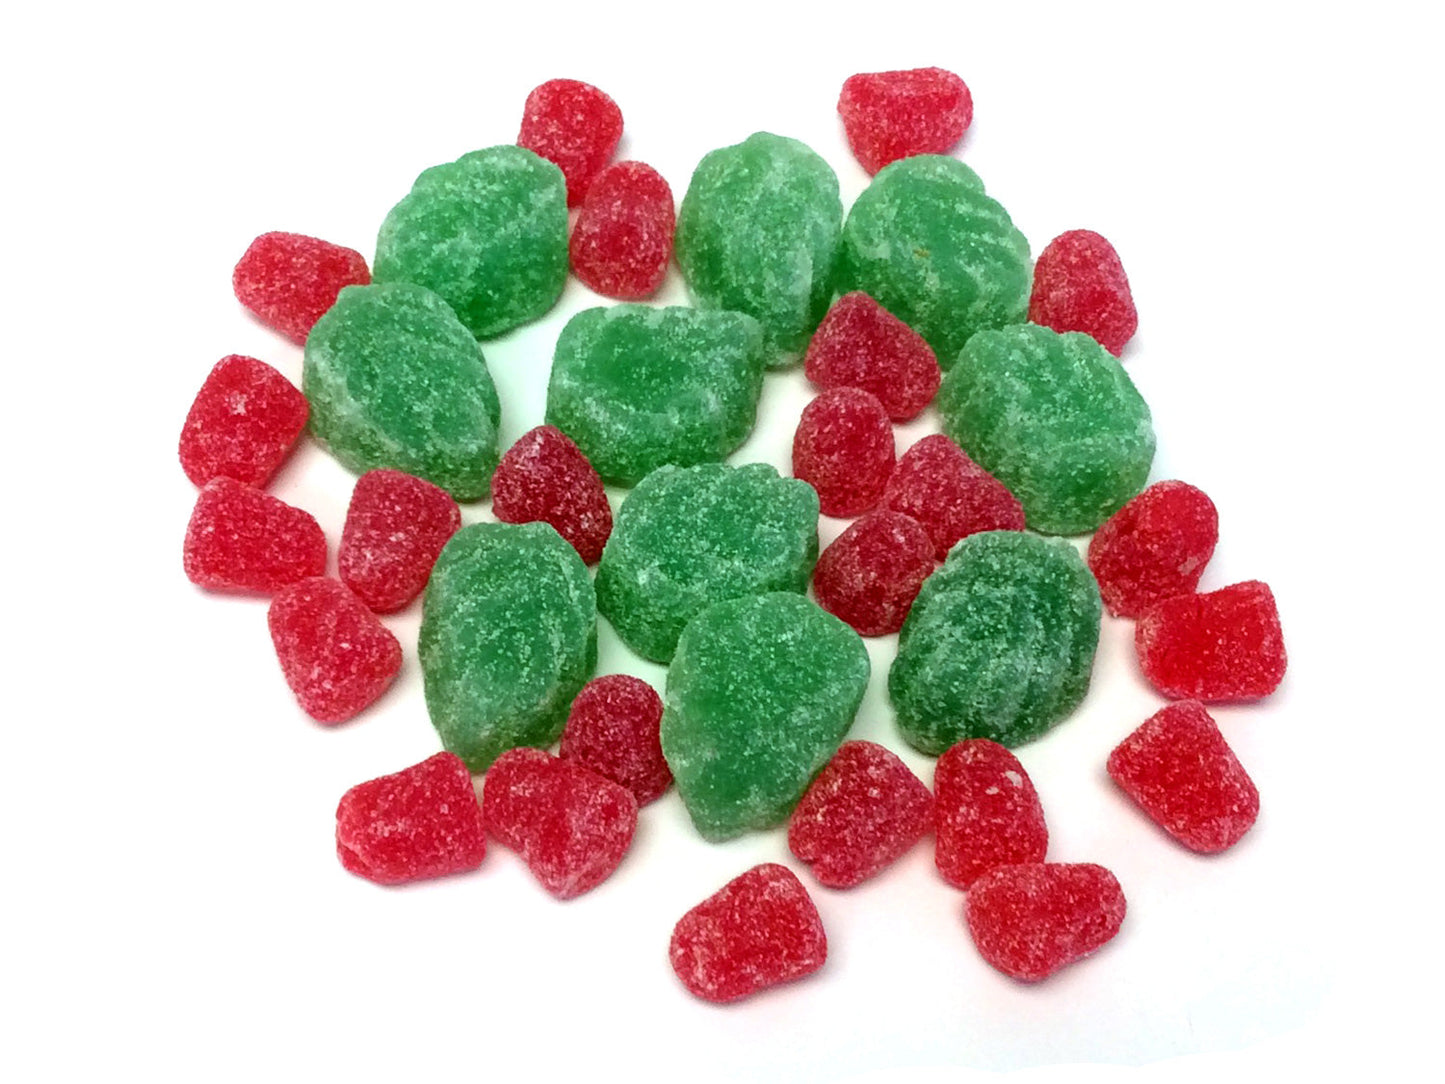 Jelly Holly & Berries - bulk 2 lb bag (180 ct)